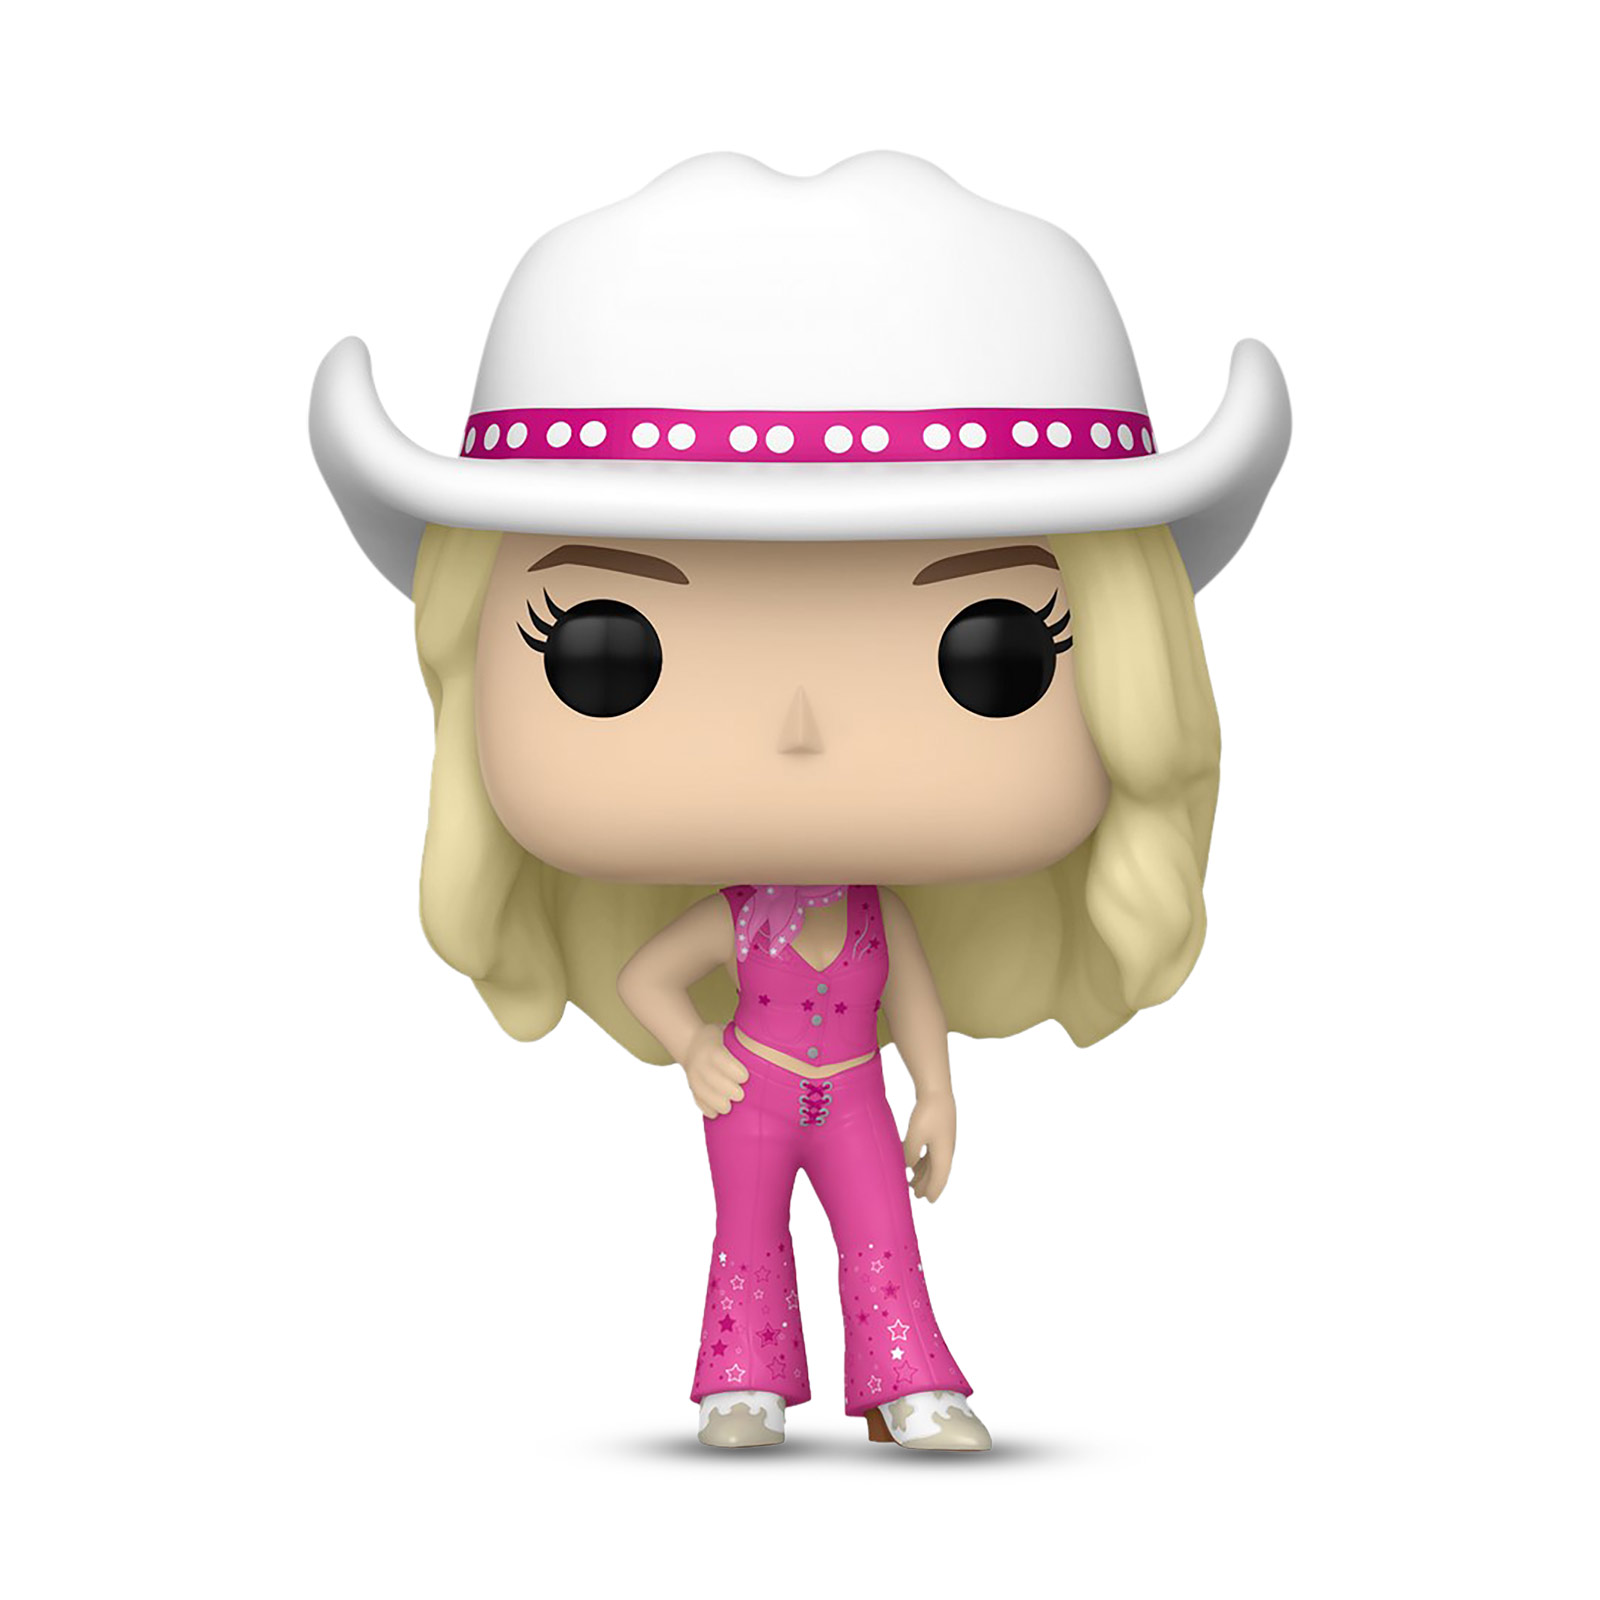 Barbie - Western Barbie Funko Pop Figuur